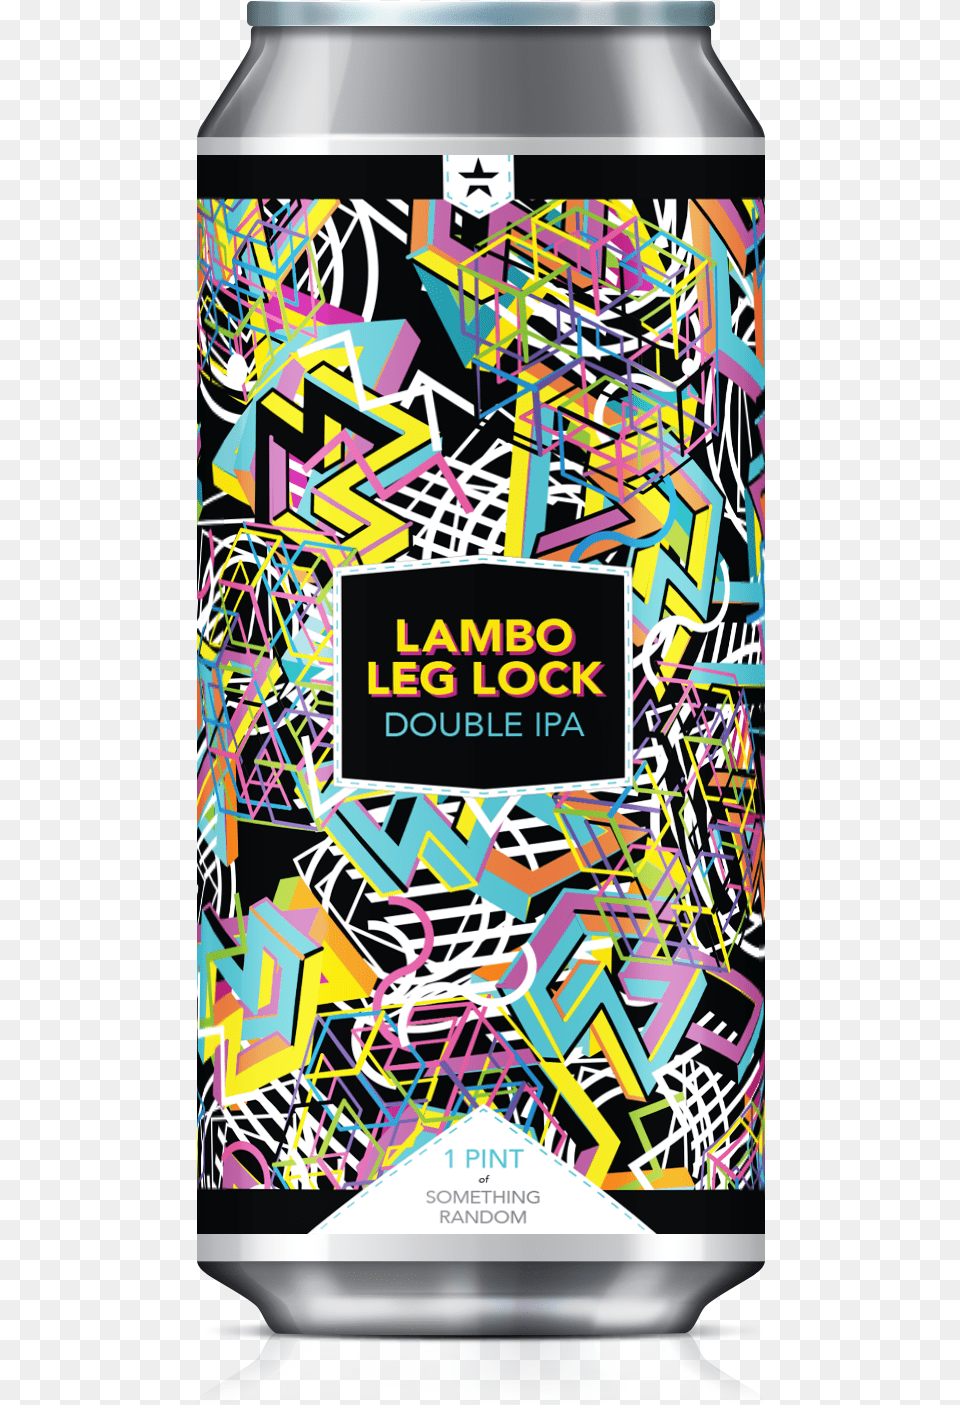 Lambo, Advertisement, Poster, Tin, Can Png Image